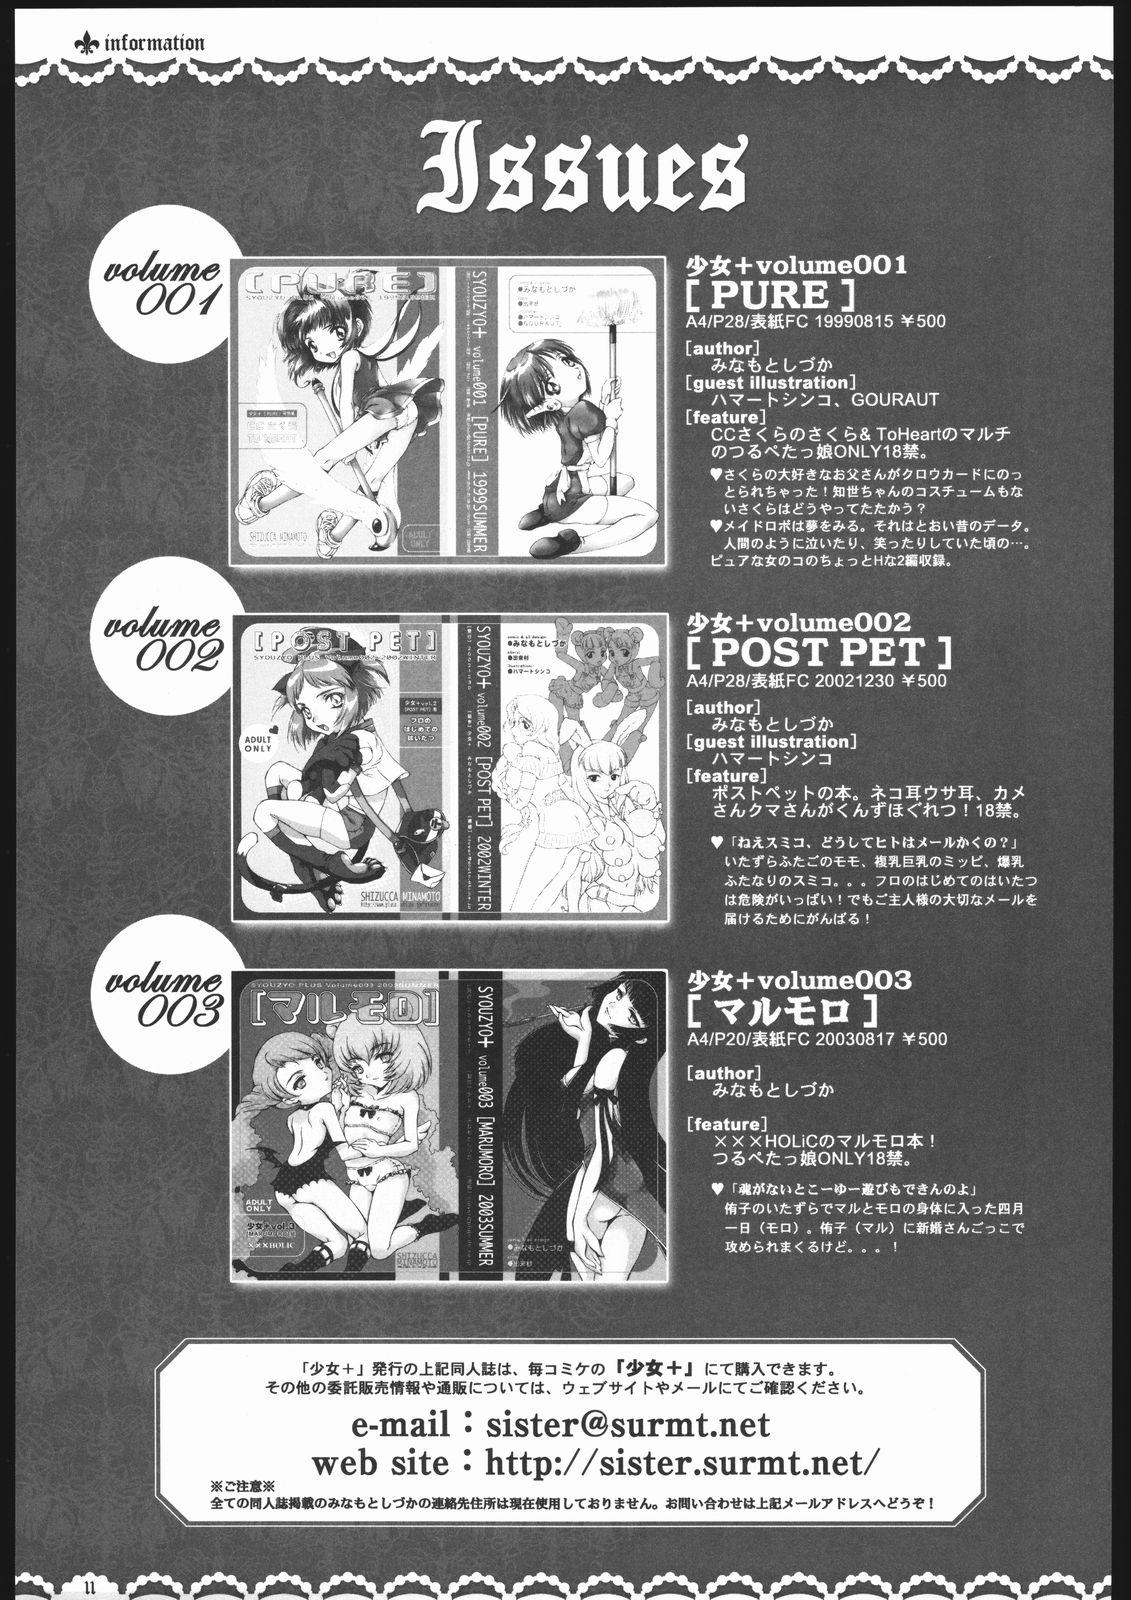 Doctor Sex Syouzyo Plus Volume 004 2005 Summer - Tsubasa reservoir chronicle Cameltoe - Page 10